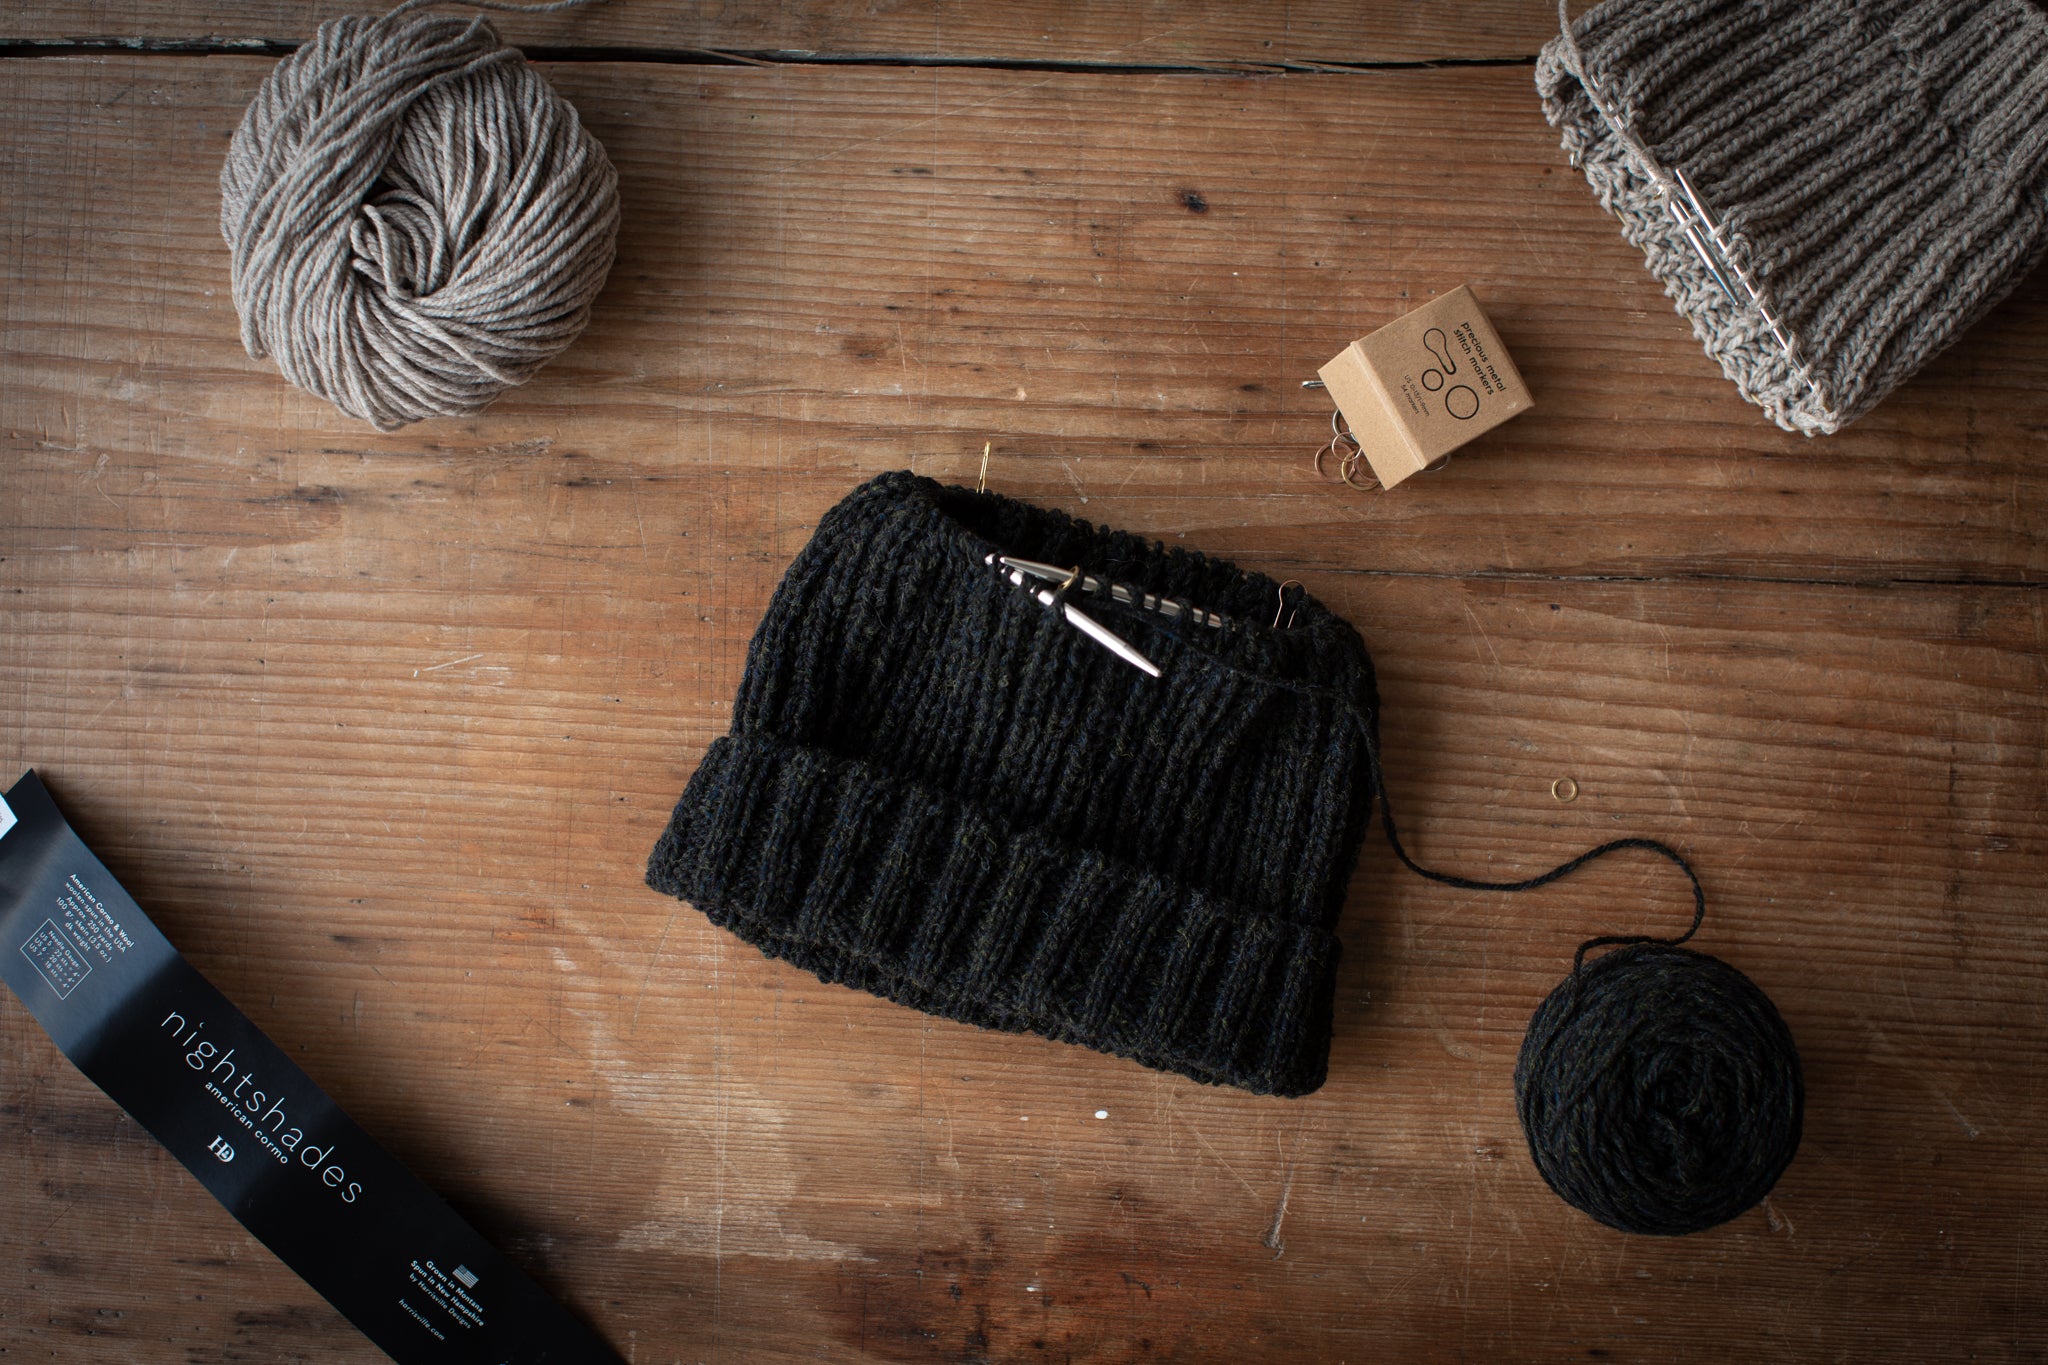 4 ply hat knitting patterns free